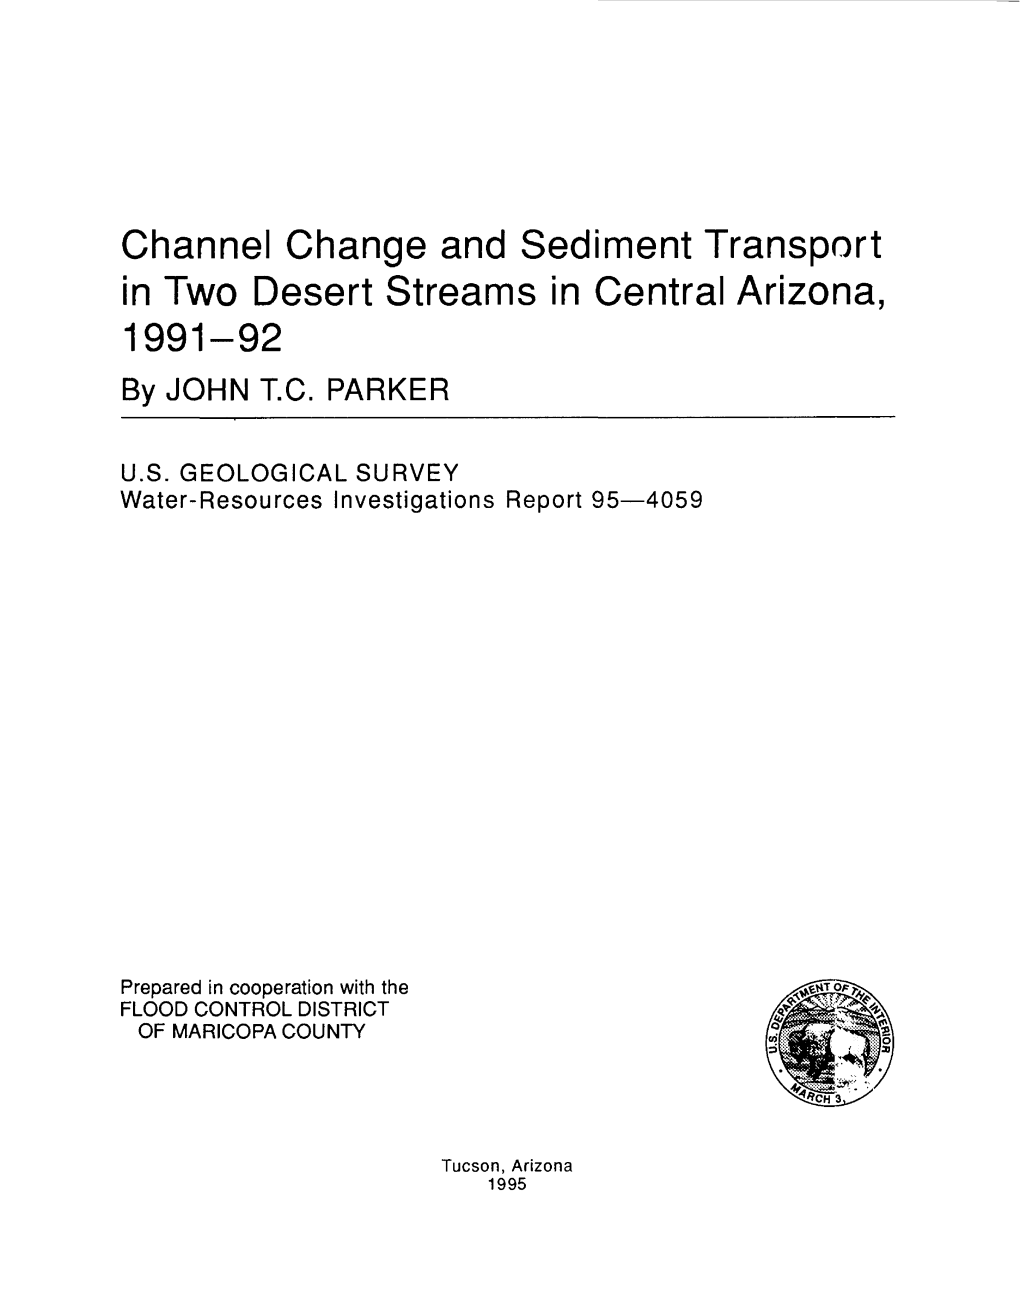 Sediment Transport in Two Desert Streams in Central Arizona, 1991-92 by JOHN T.C